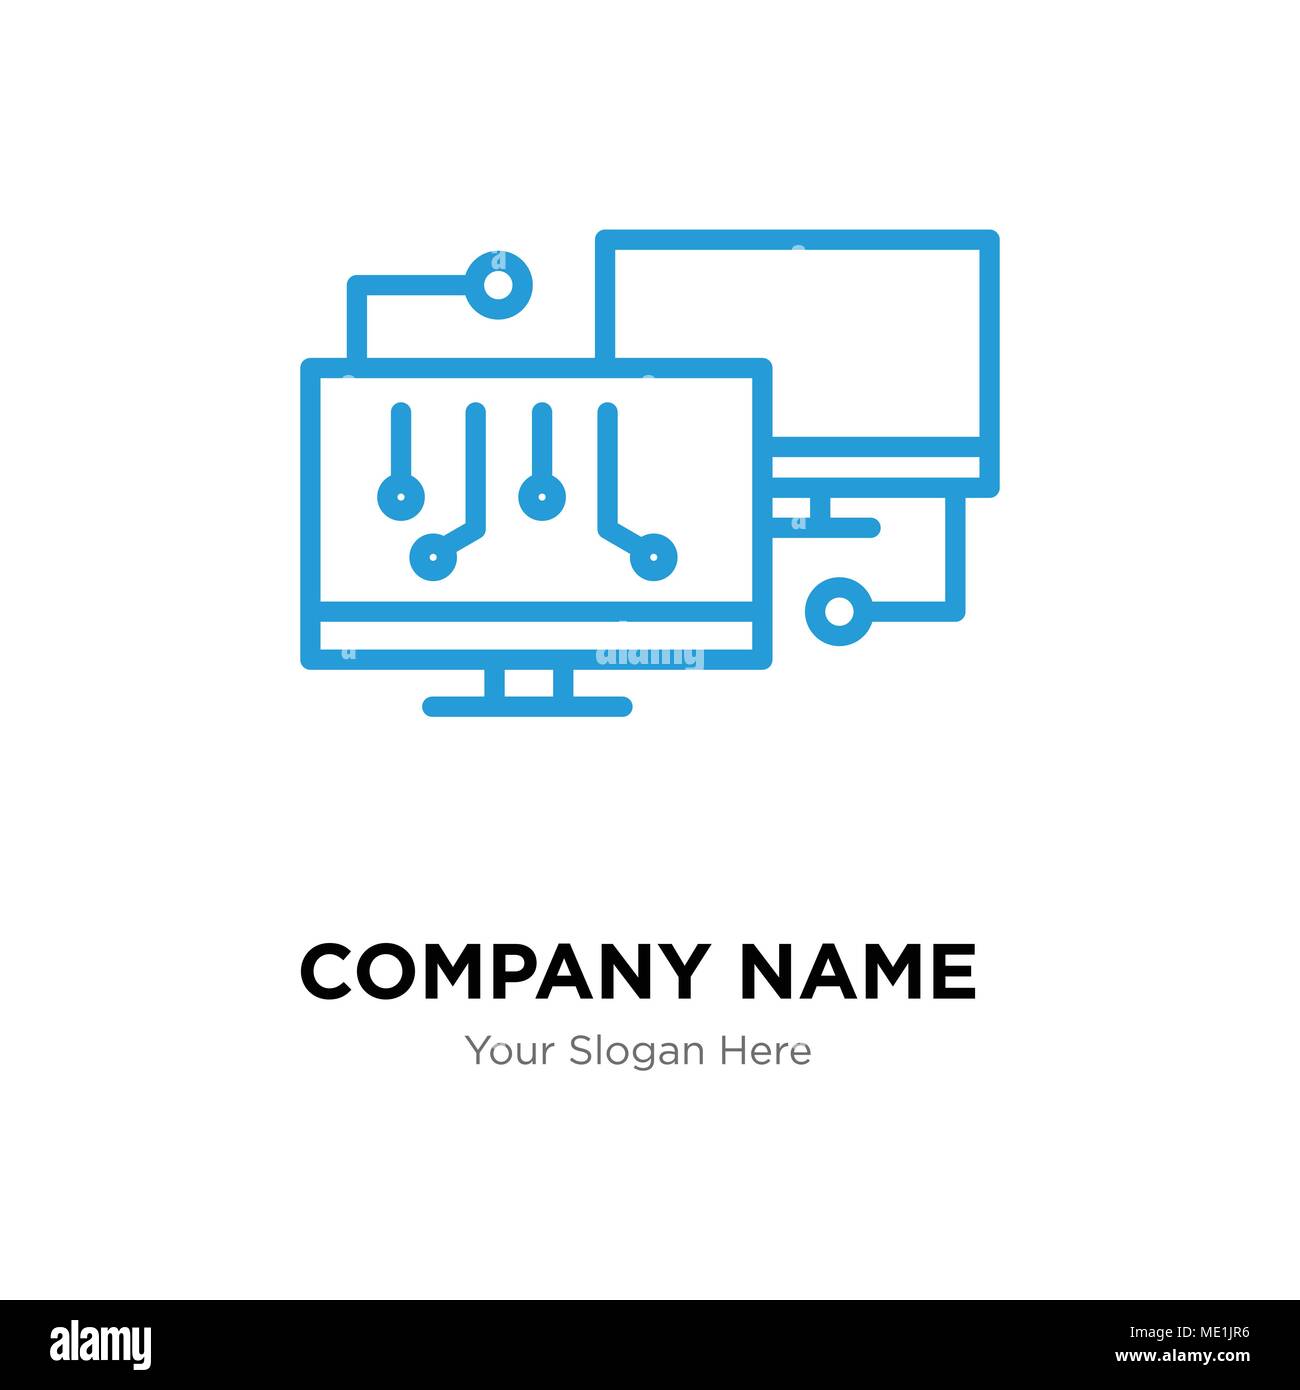 Network company logo design template, Business corporate vector icon Stock Vector